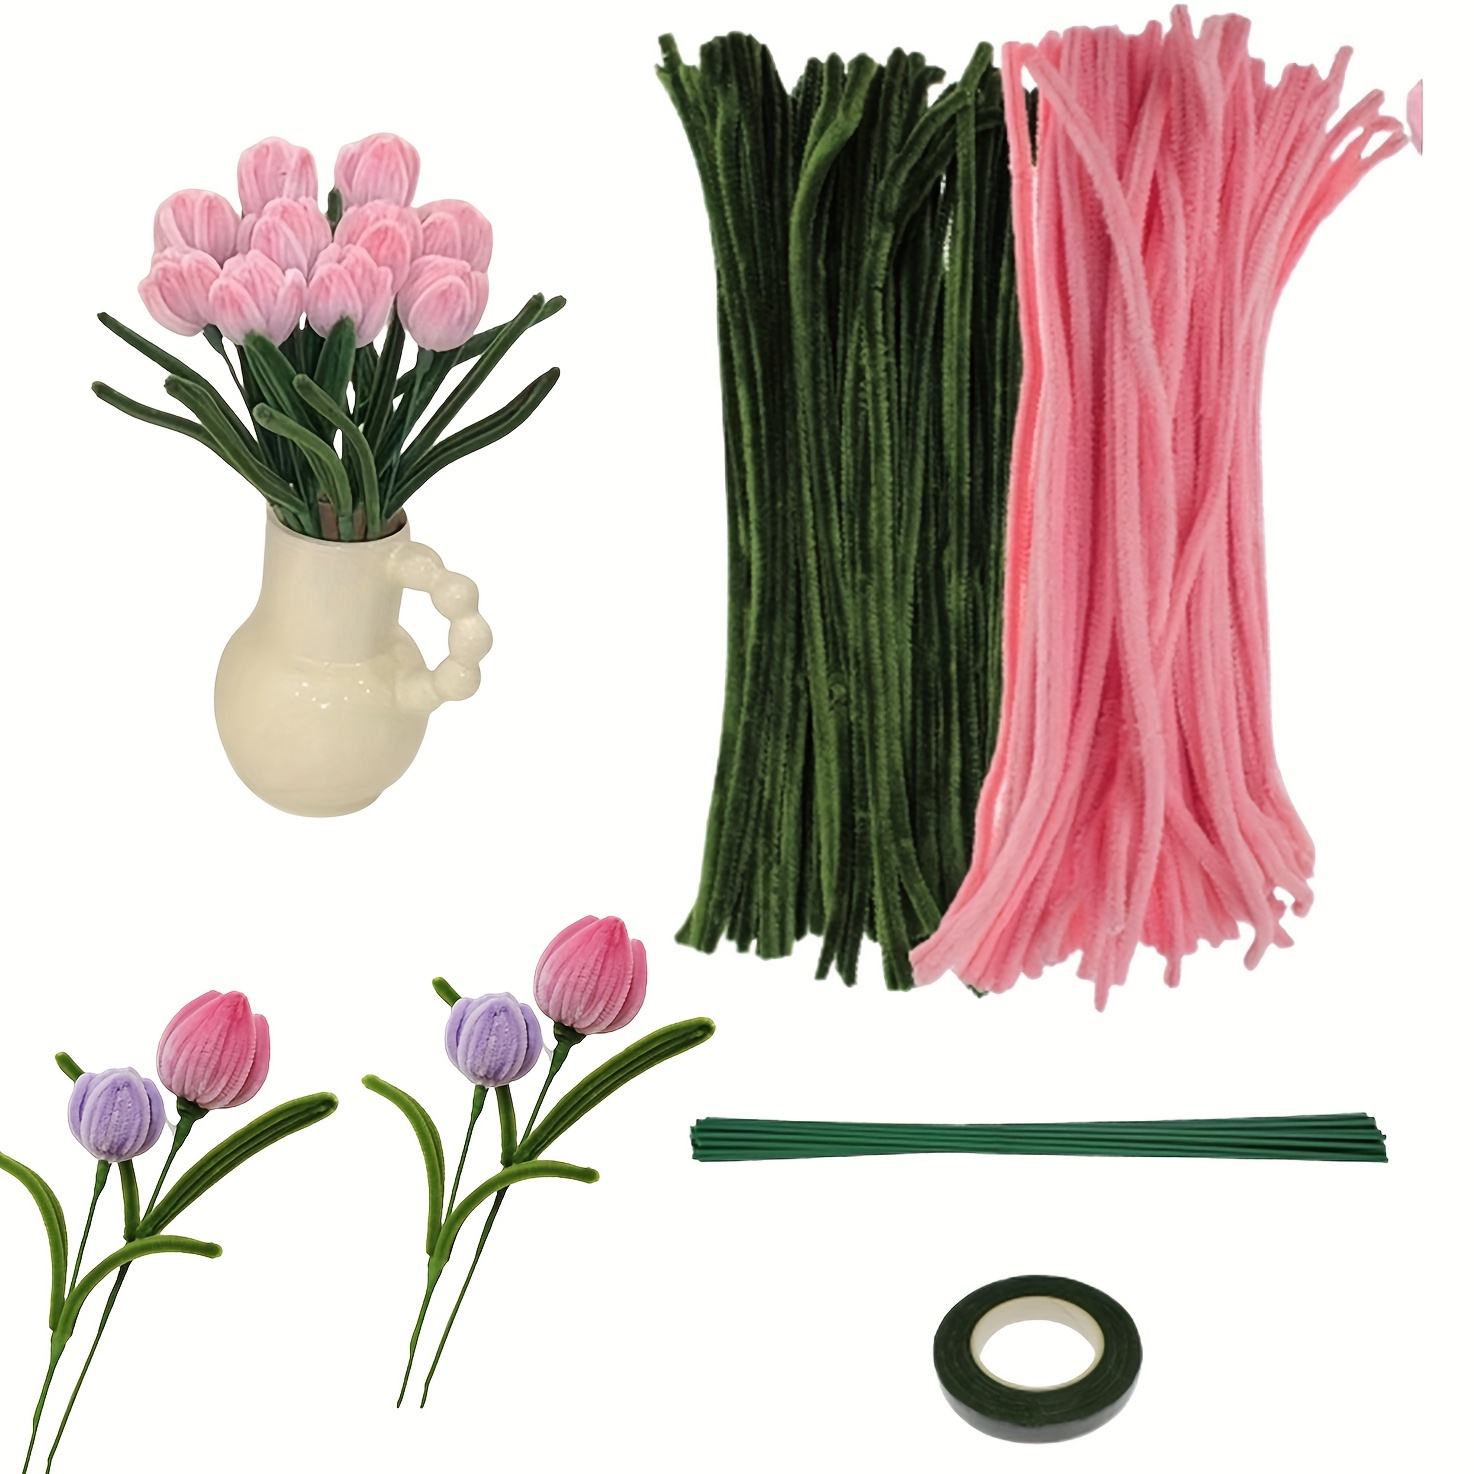 Pipe Cleaners DIY Kit - Tulip